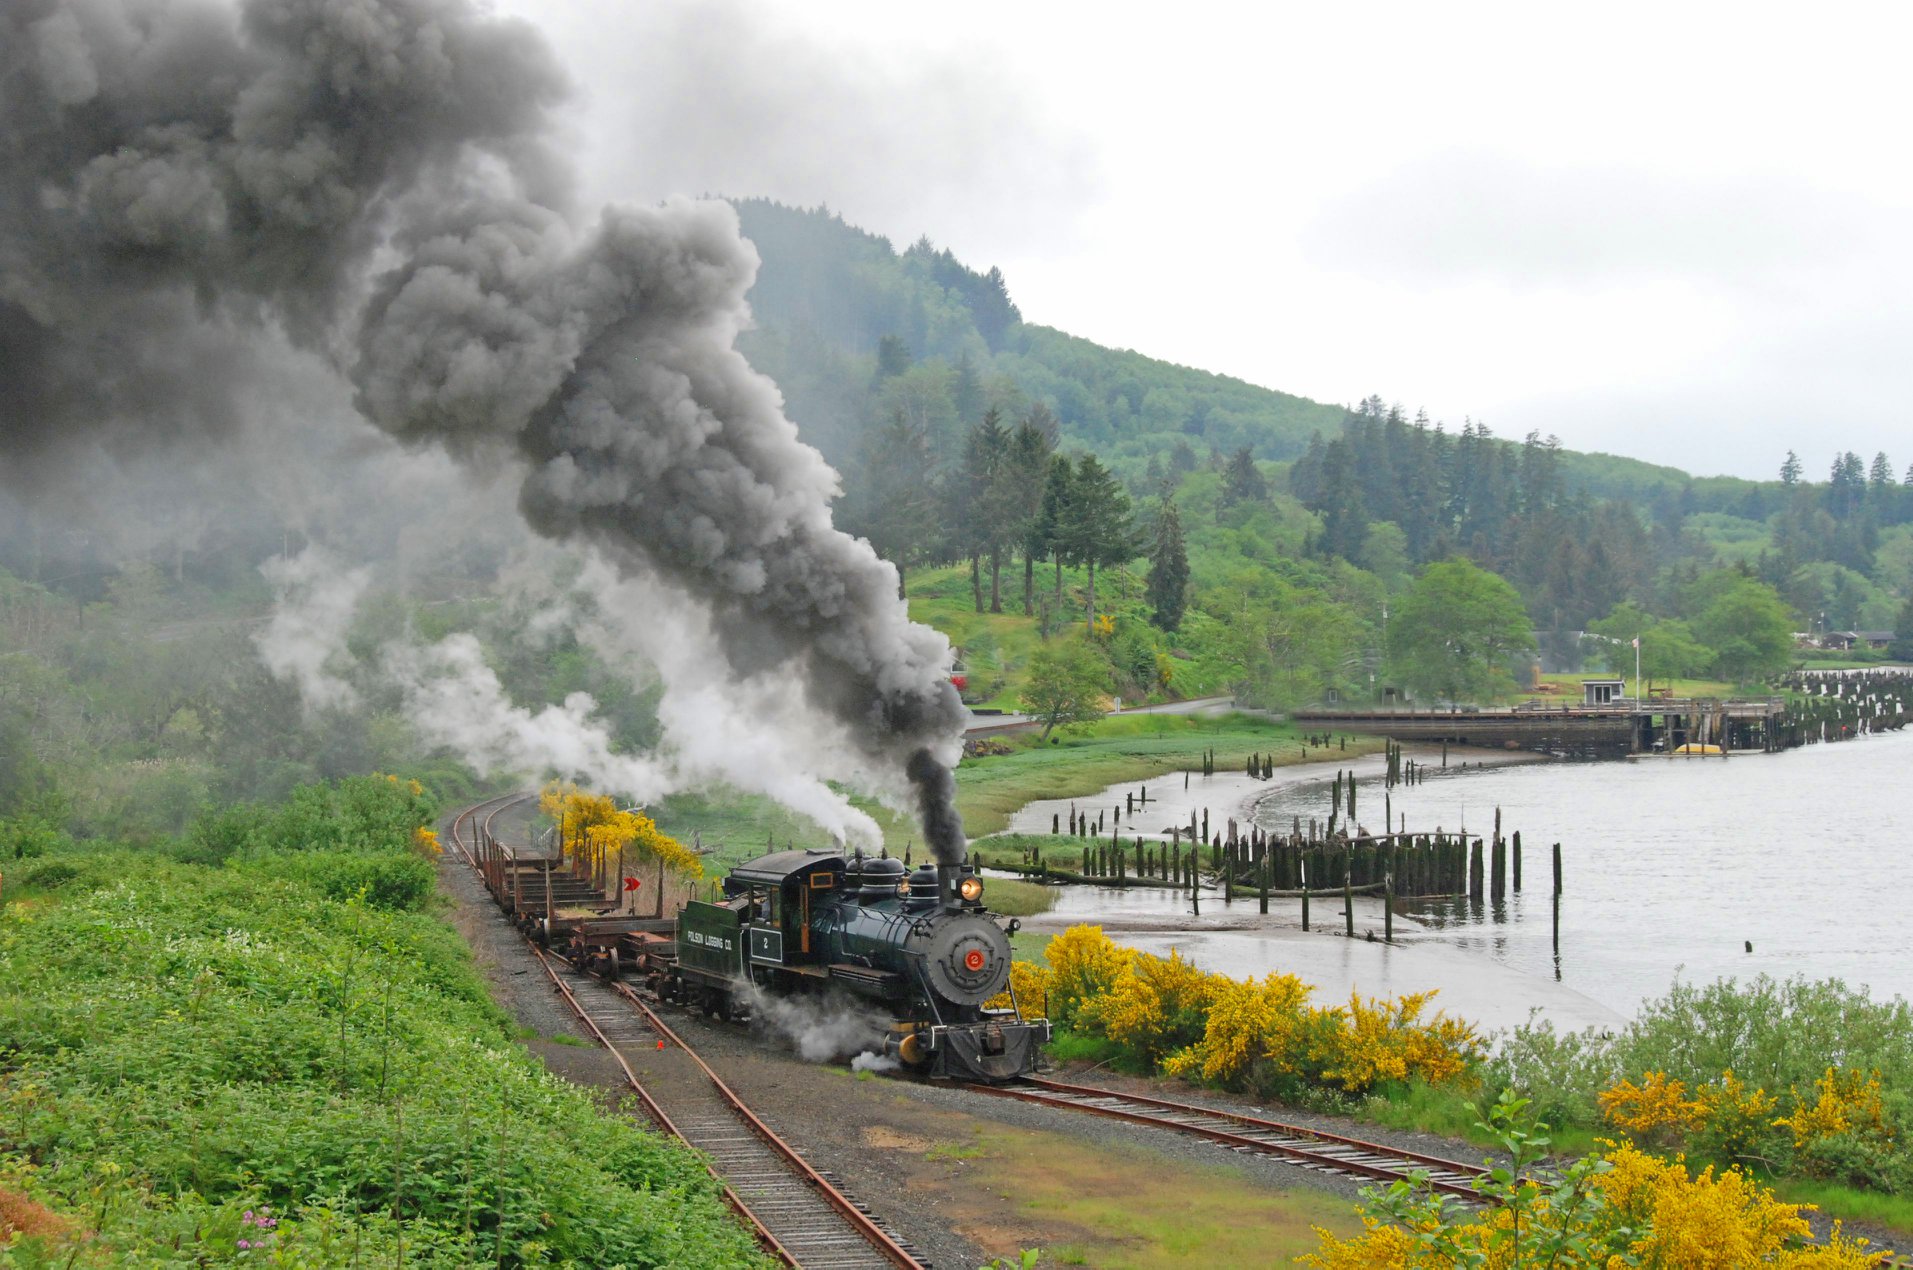 You’ll Love This Magical Train Ride Along The Oregon Coast